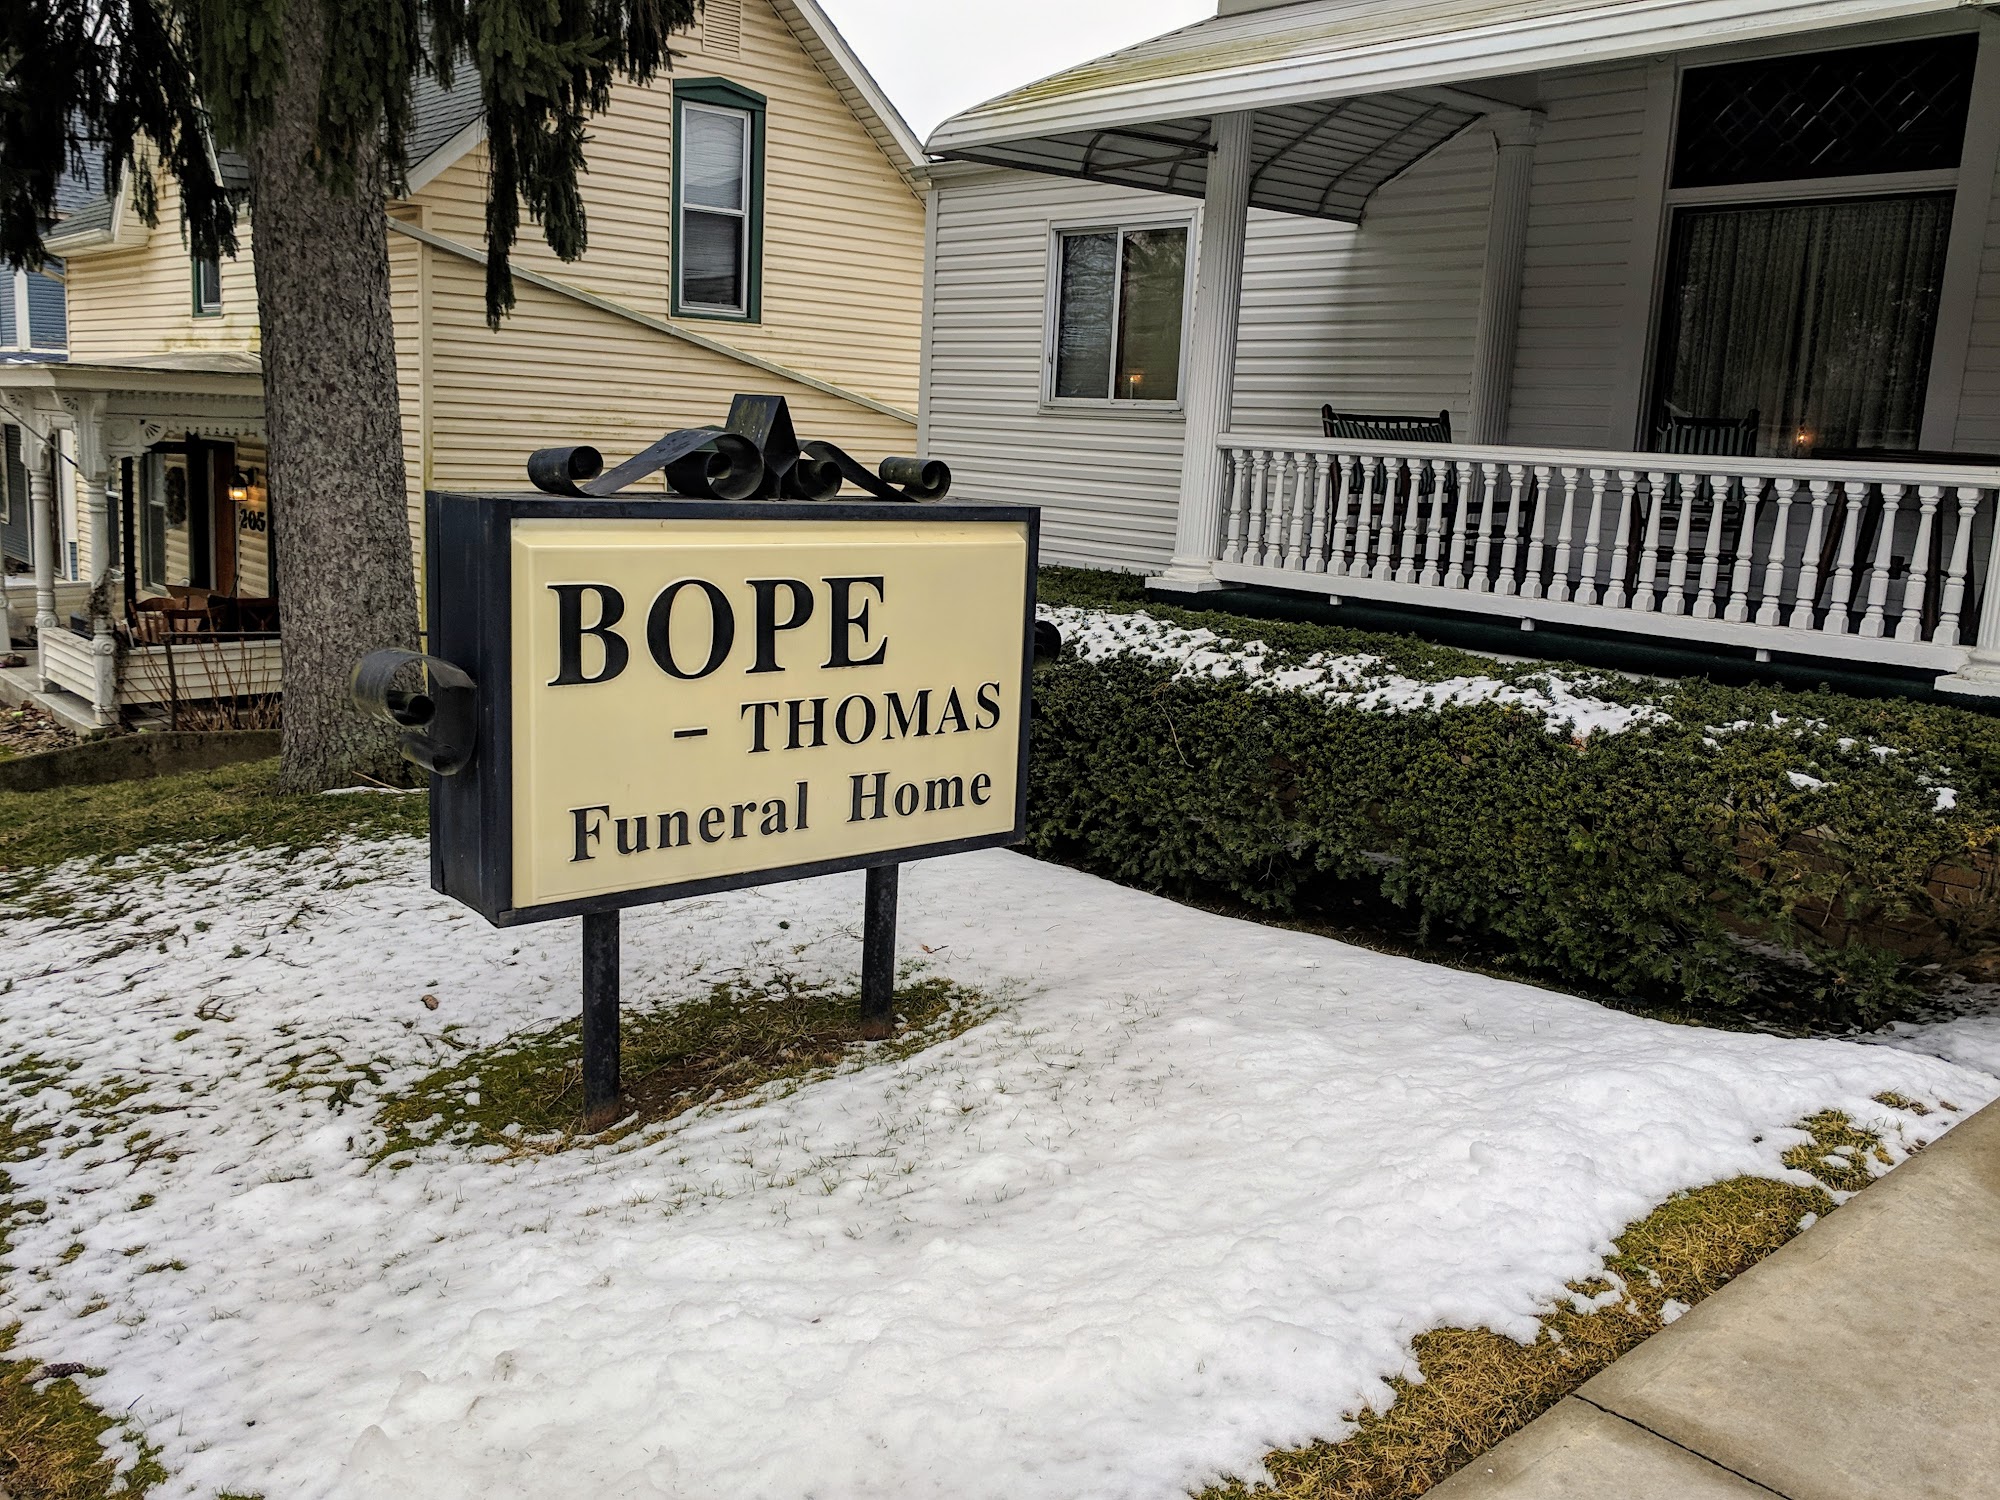 Bope-Thomas Funeral Home 203 S Columbus St, Somerset Ohio 43783